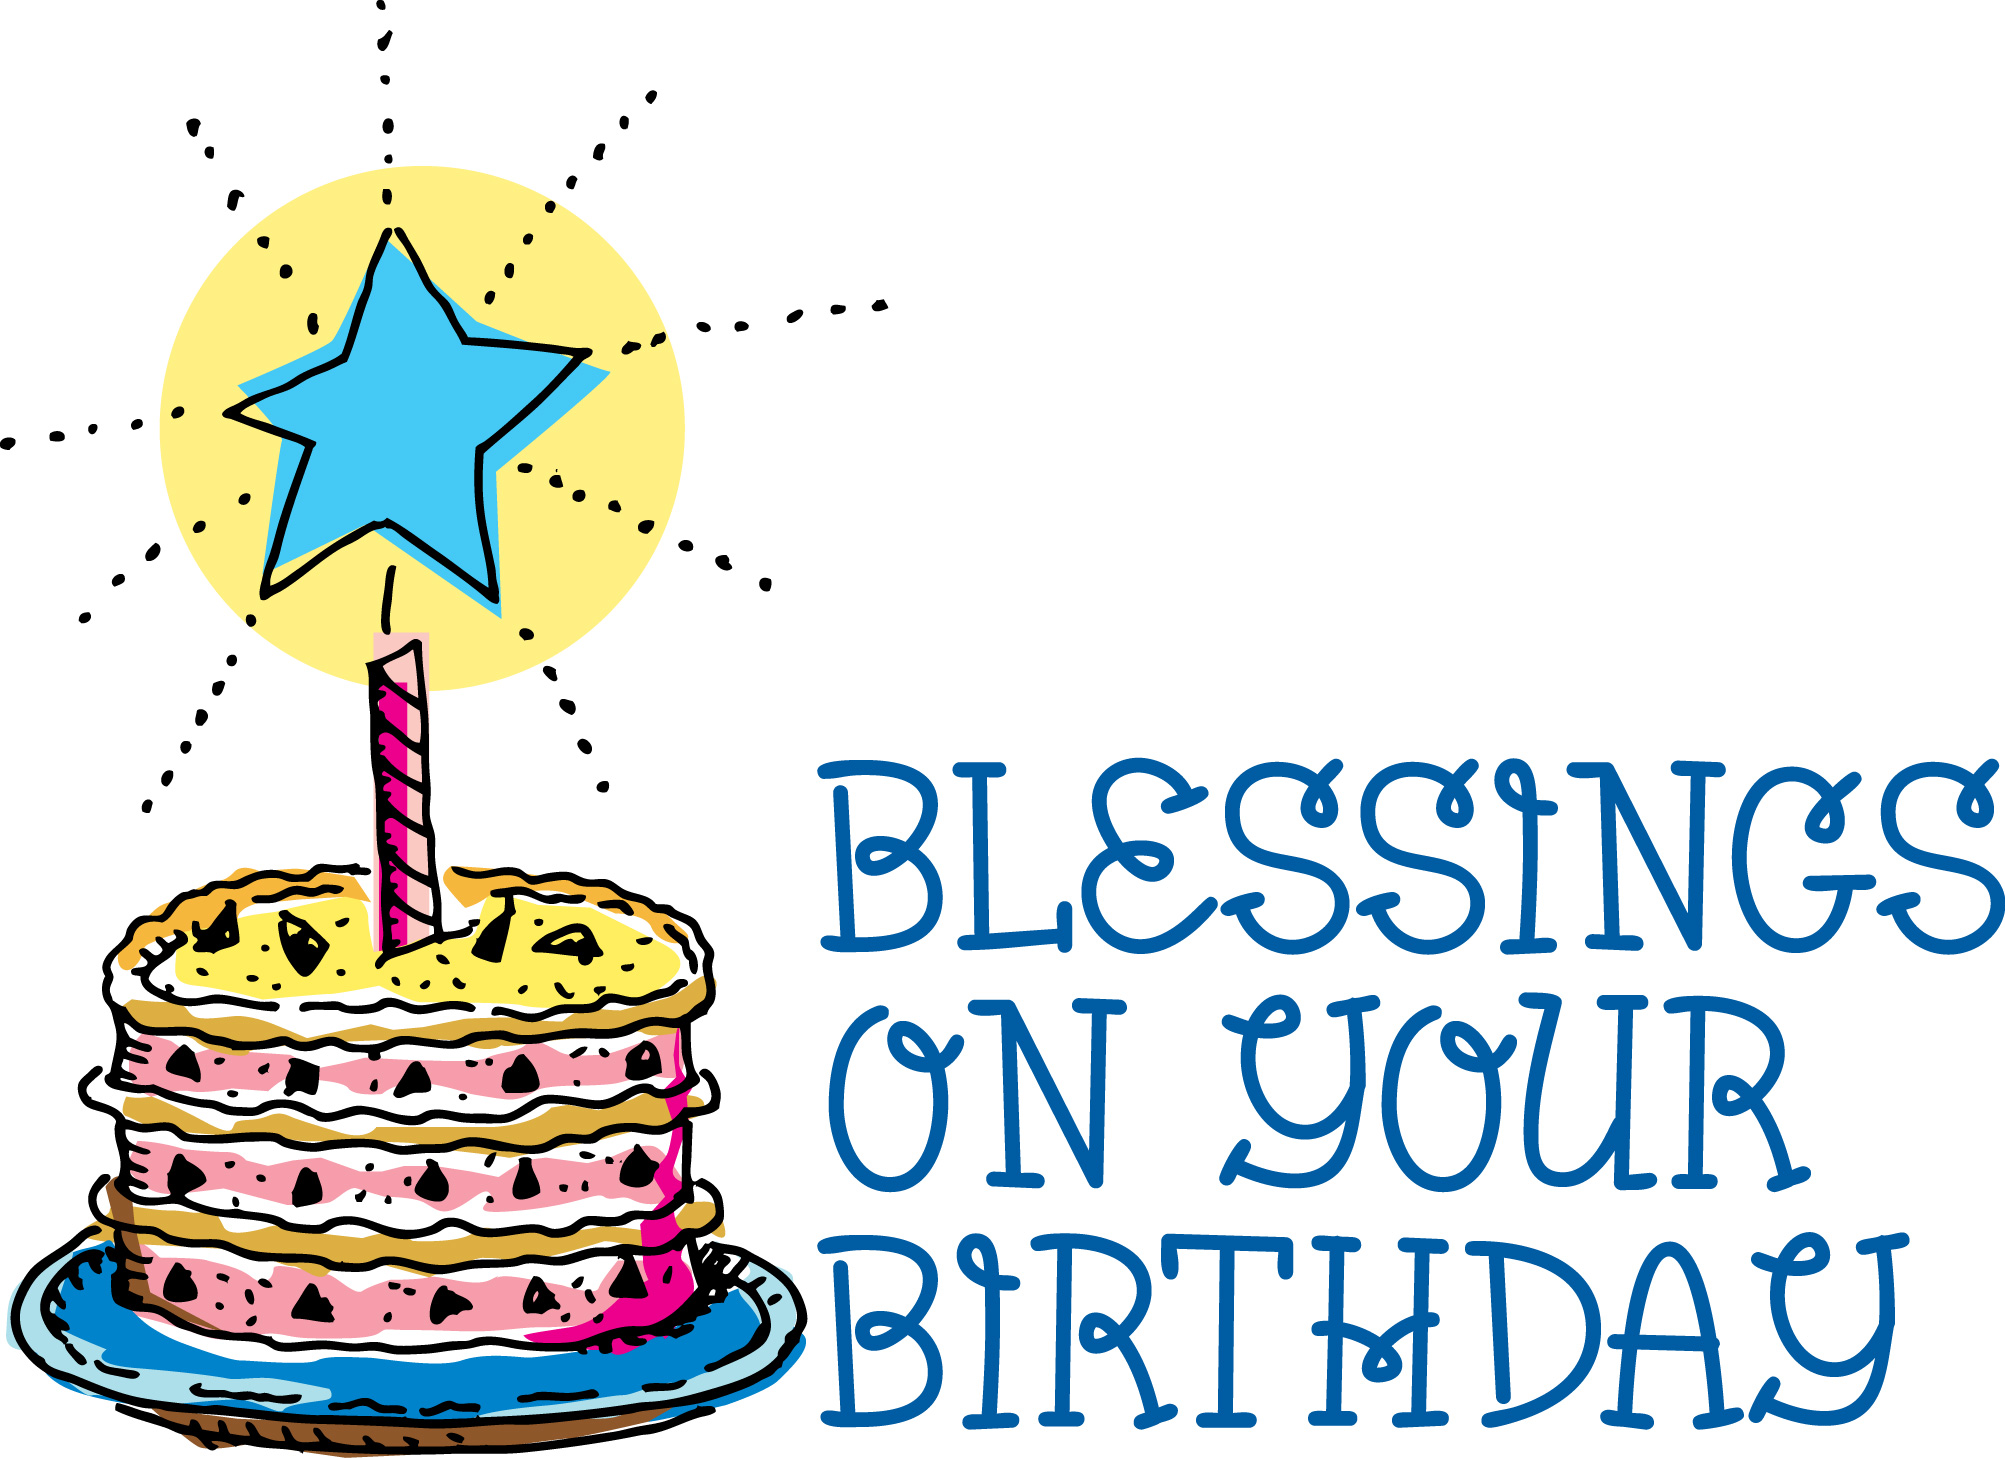 Free Church Birthdays Cliparts, Download Free Church Birthdays Cliparts ...